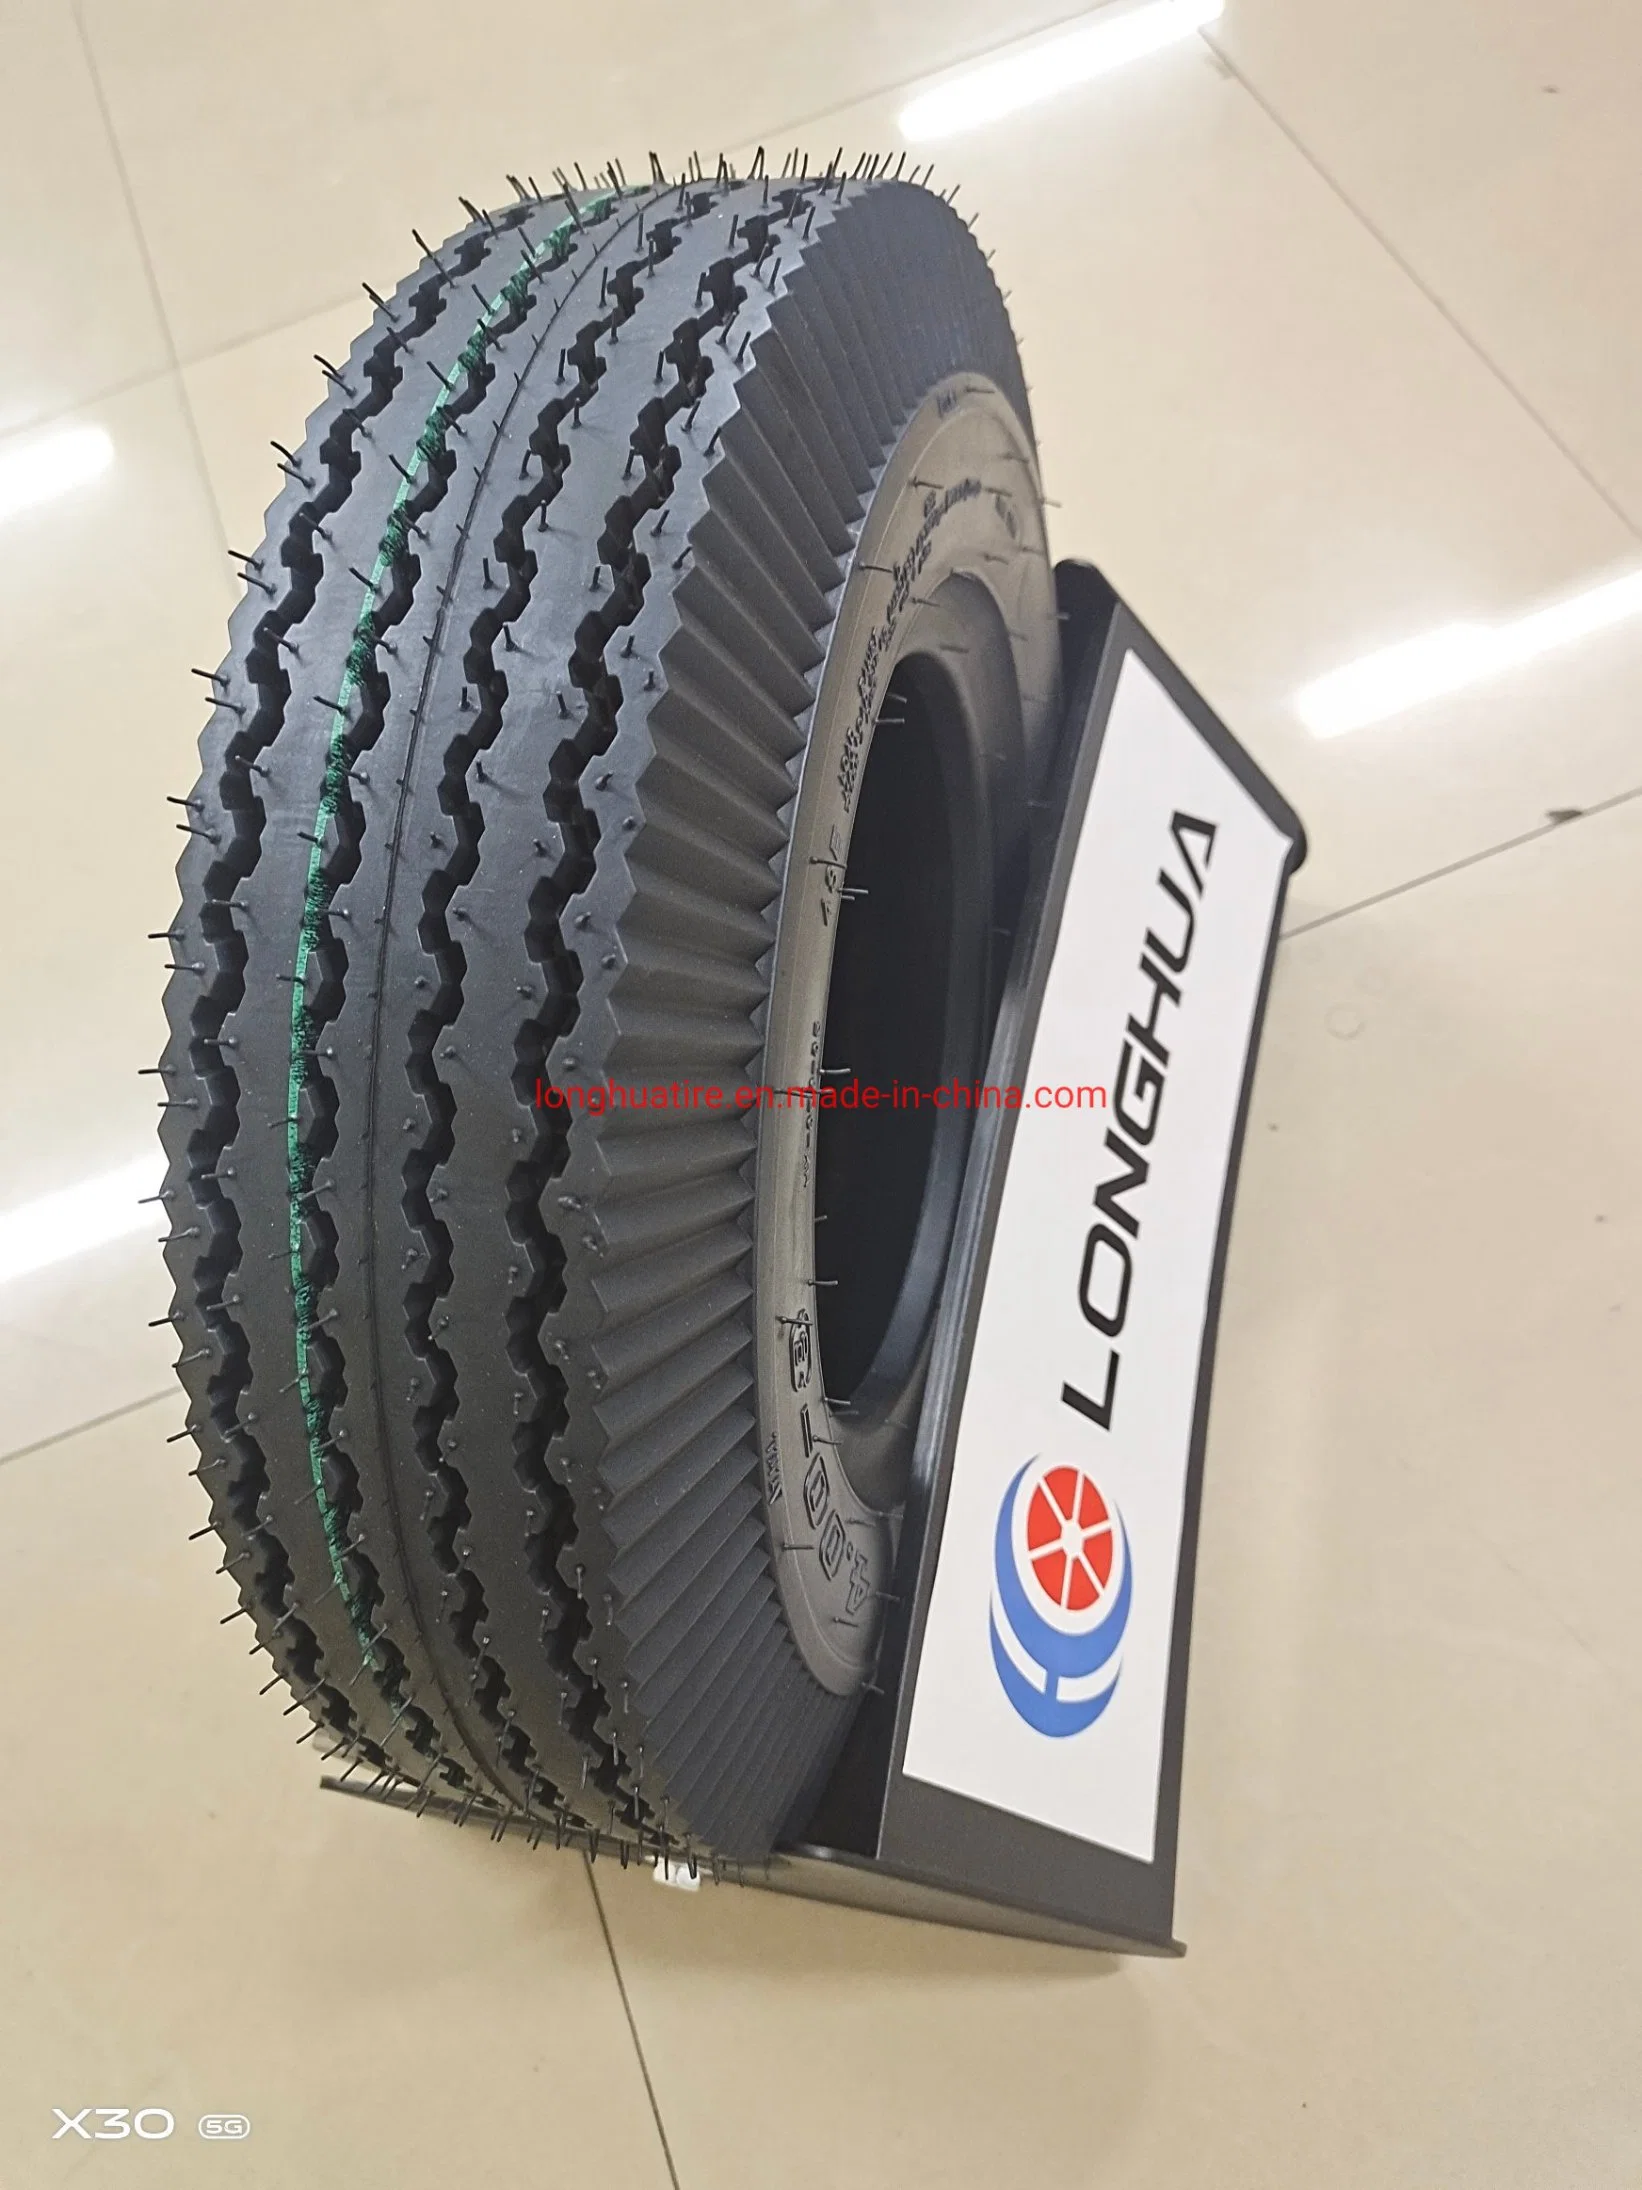 Qingdao usine de pneus pour motos de meilleure qualité d'alimentation (3.00-18 3.25-18 100/90-18)